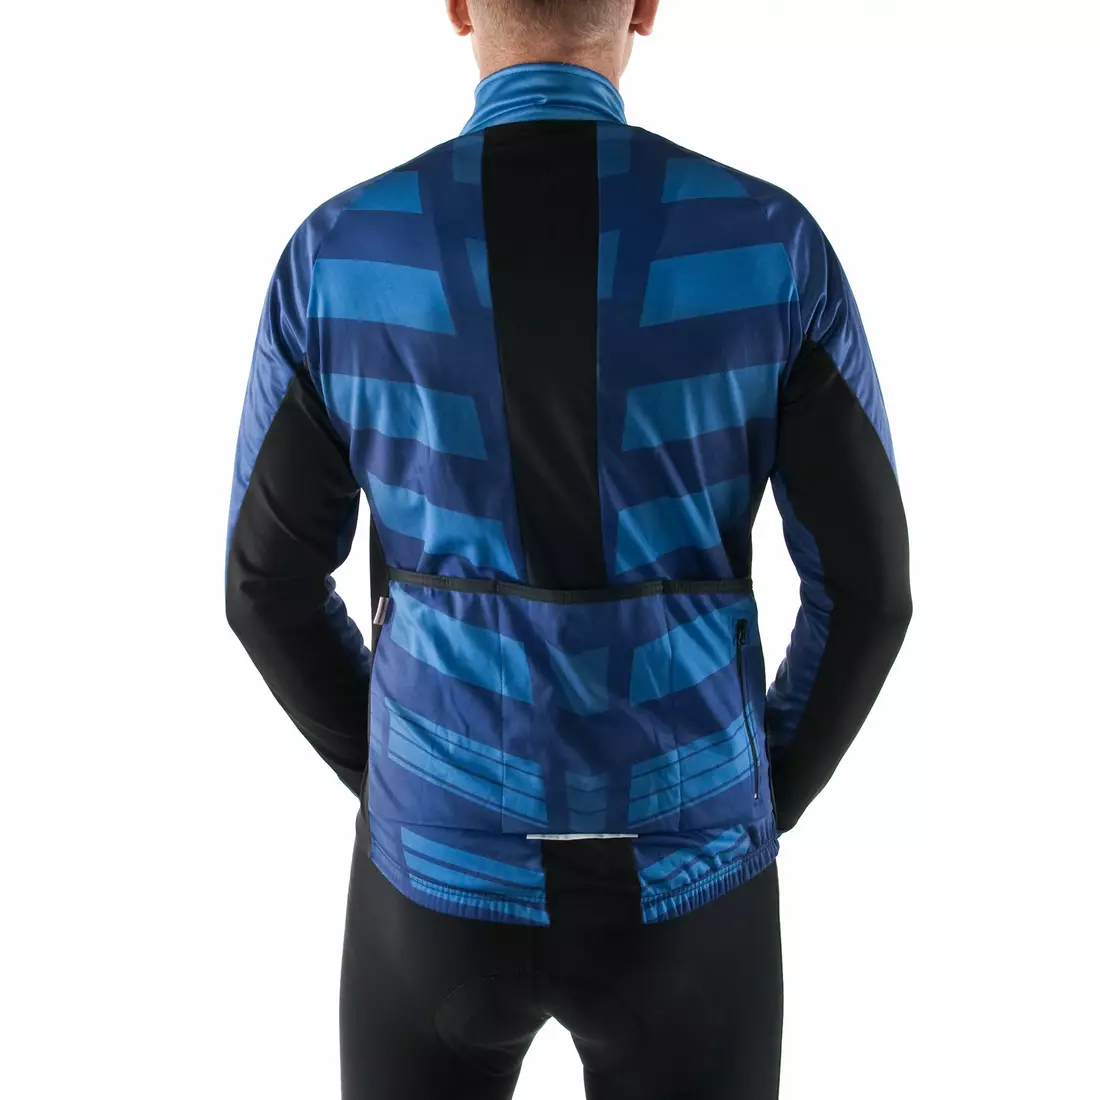 KAYMAQ men's winter cycling jacket softshell, blue JWS-001